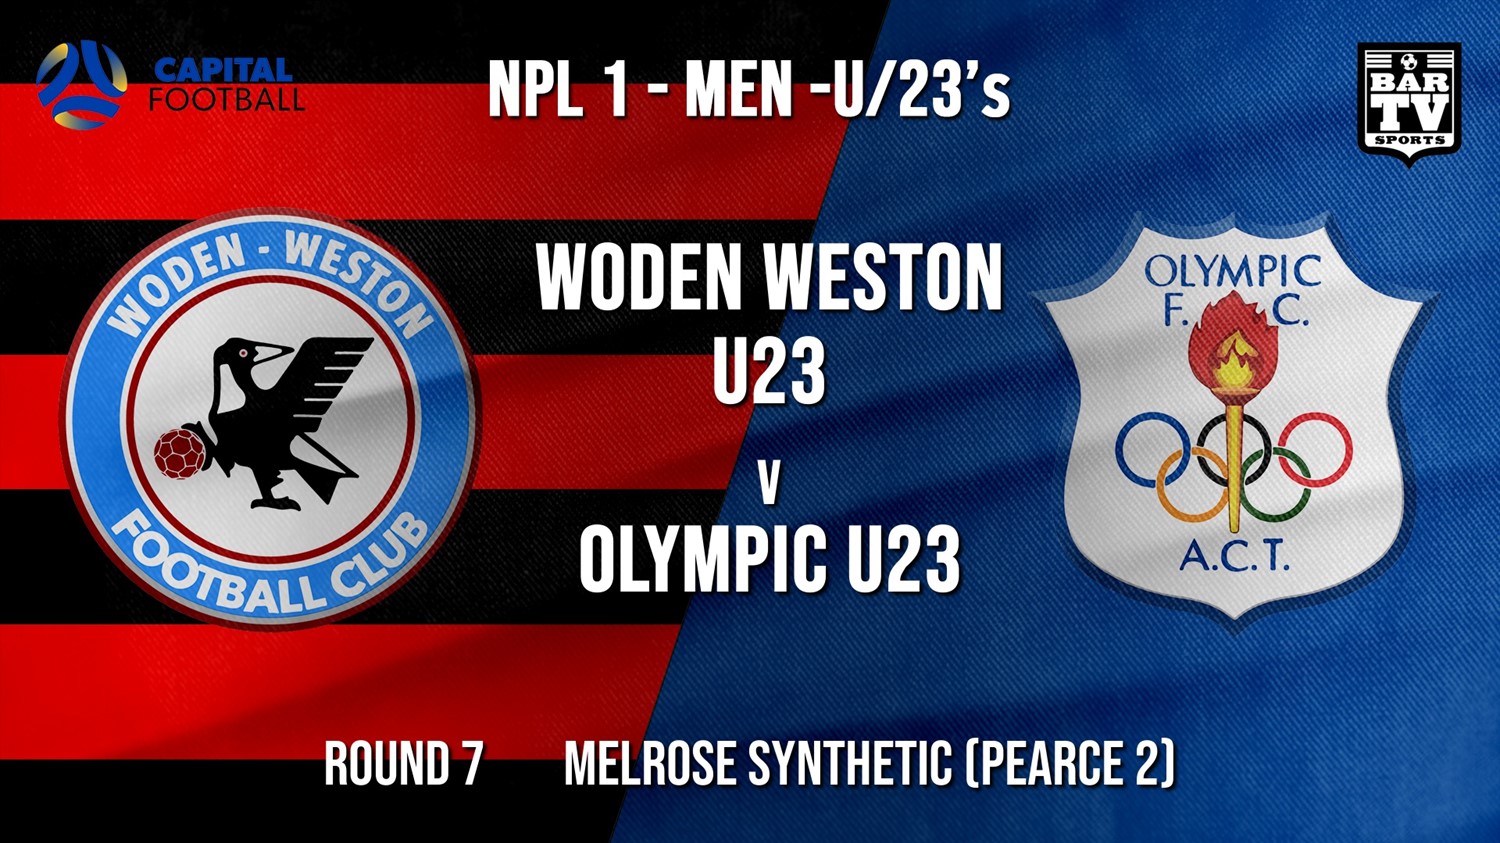 NPL1 Men - U23 - Capital Football  Round 7 - Woden Weston U23 v Canberra Olympic U23 Minigame Slate Image